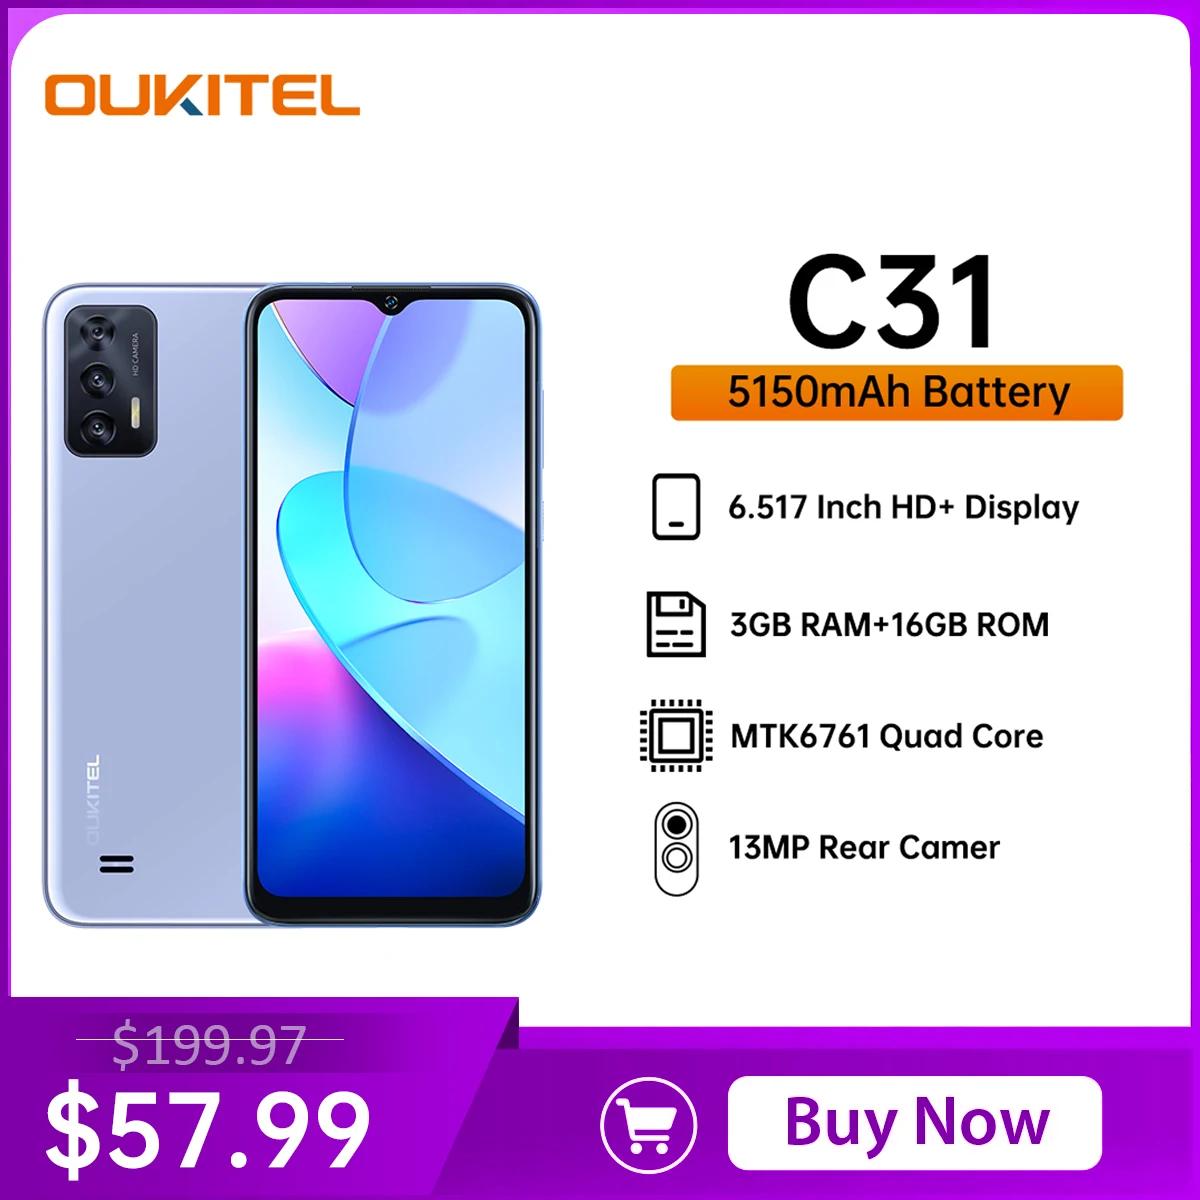 OUKITEL C31 Android 12 Smartphone 6.517 Inch HD+Display 3GB 16GB Cellphone 13MP Triple Camera Quad Core Mobile Phone 5150mAh